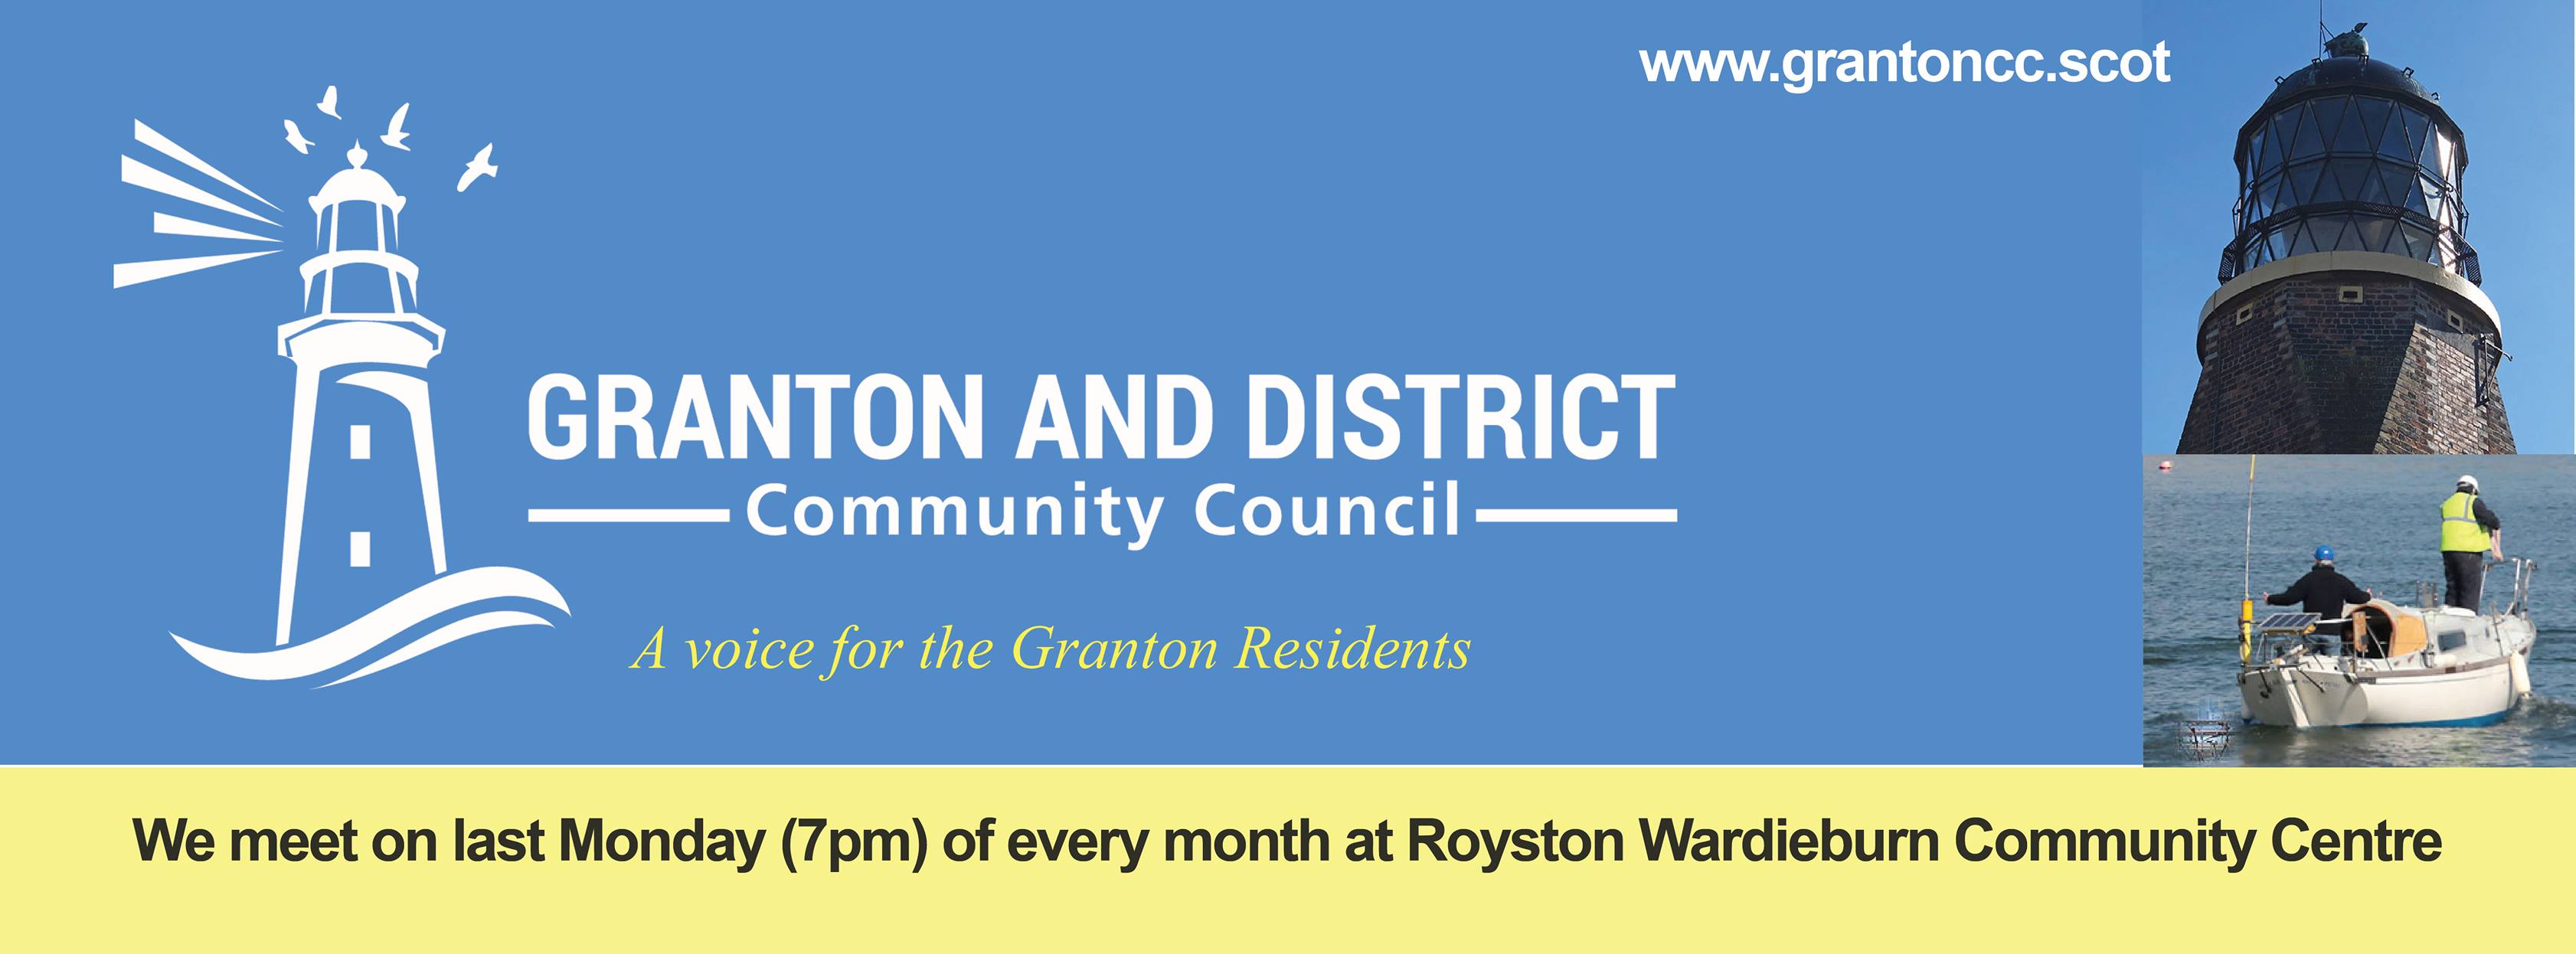 Granton & District CC latest newsletter